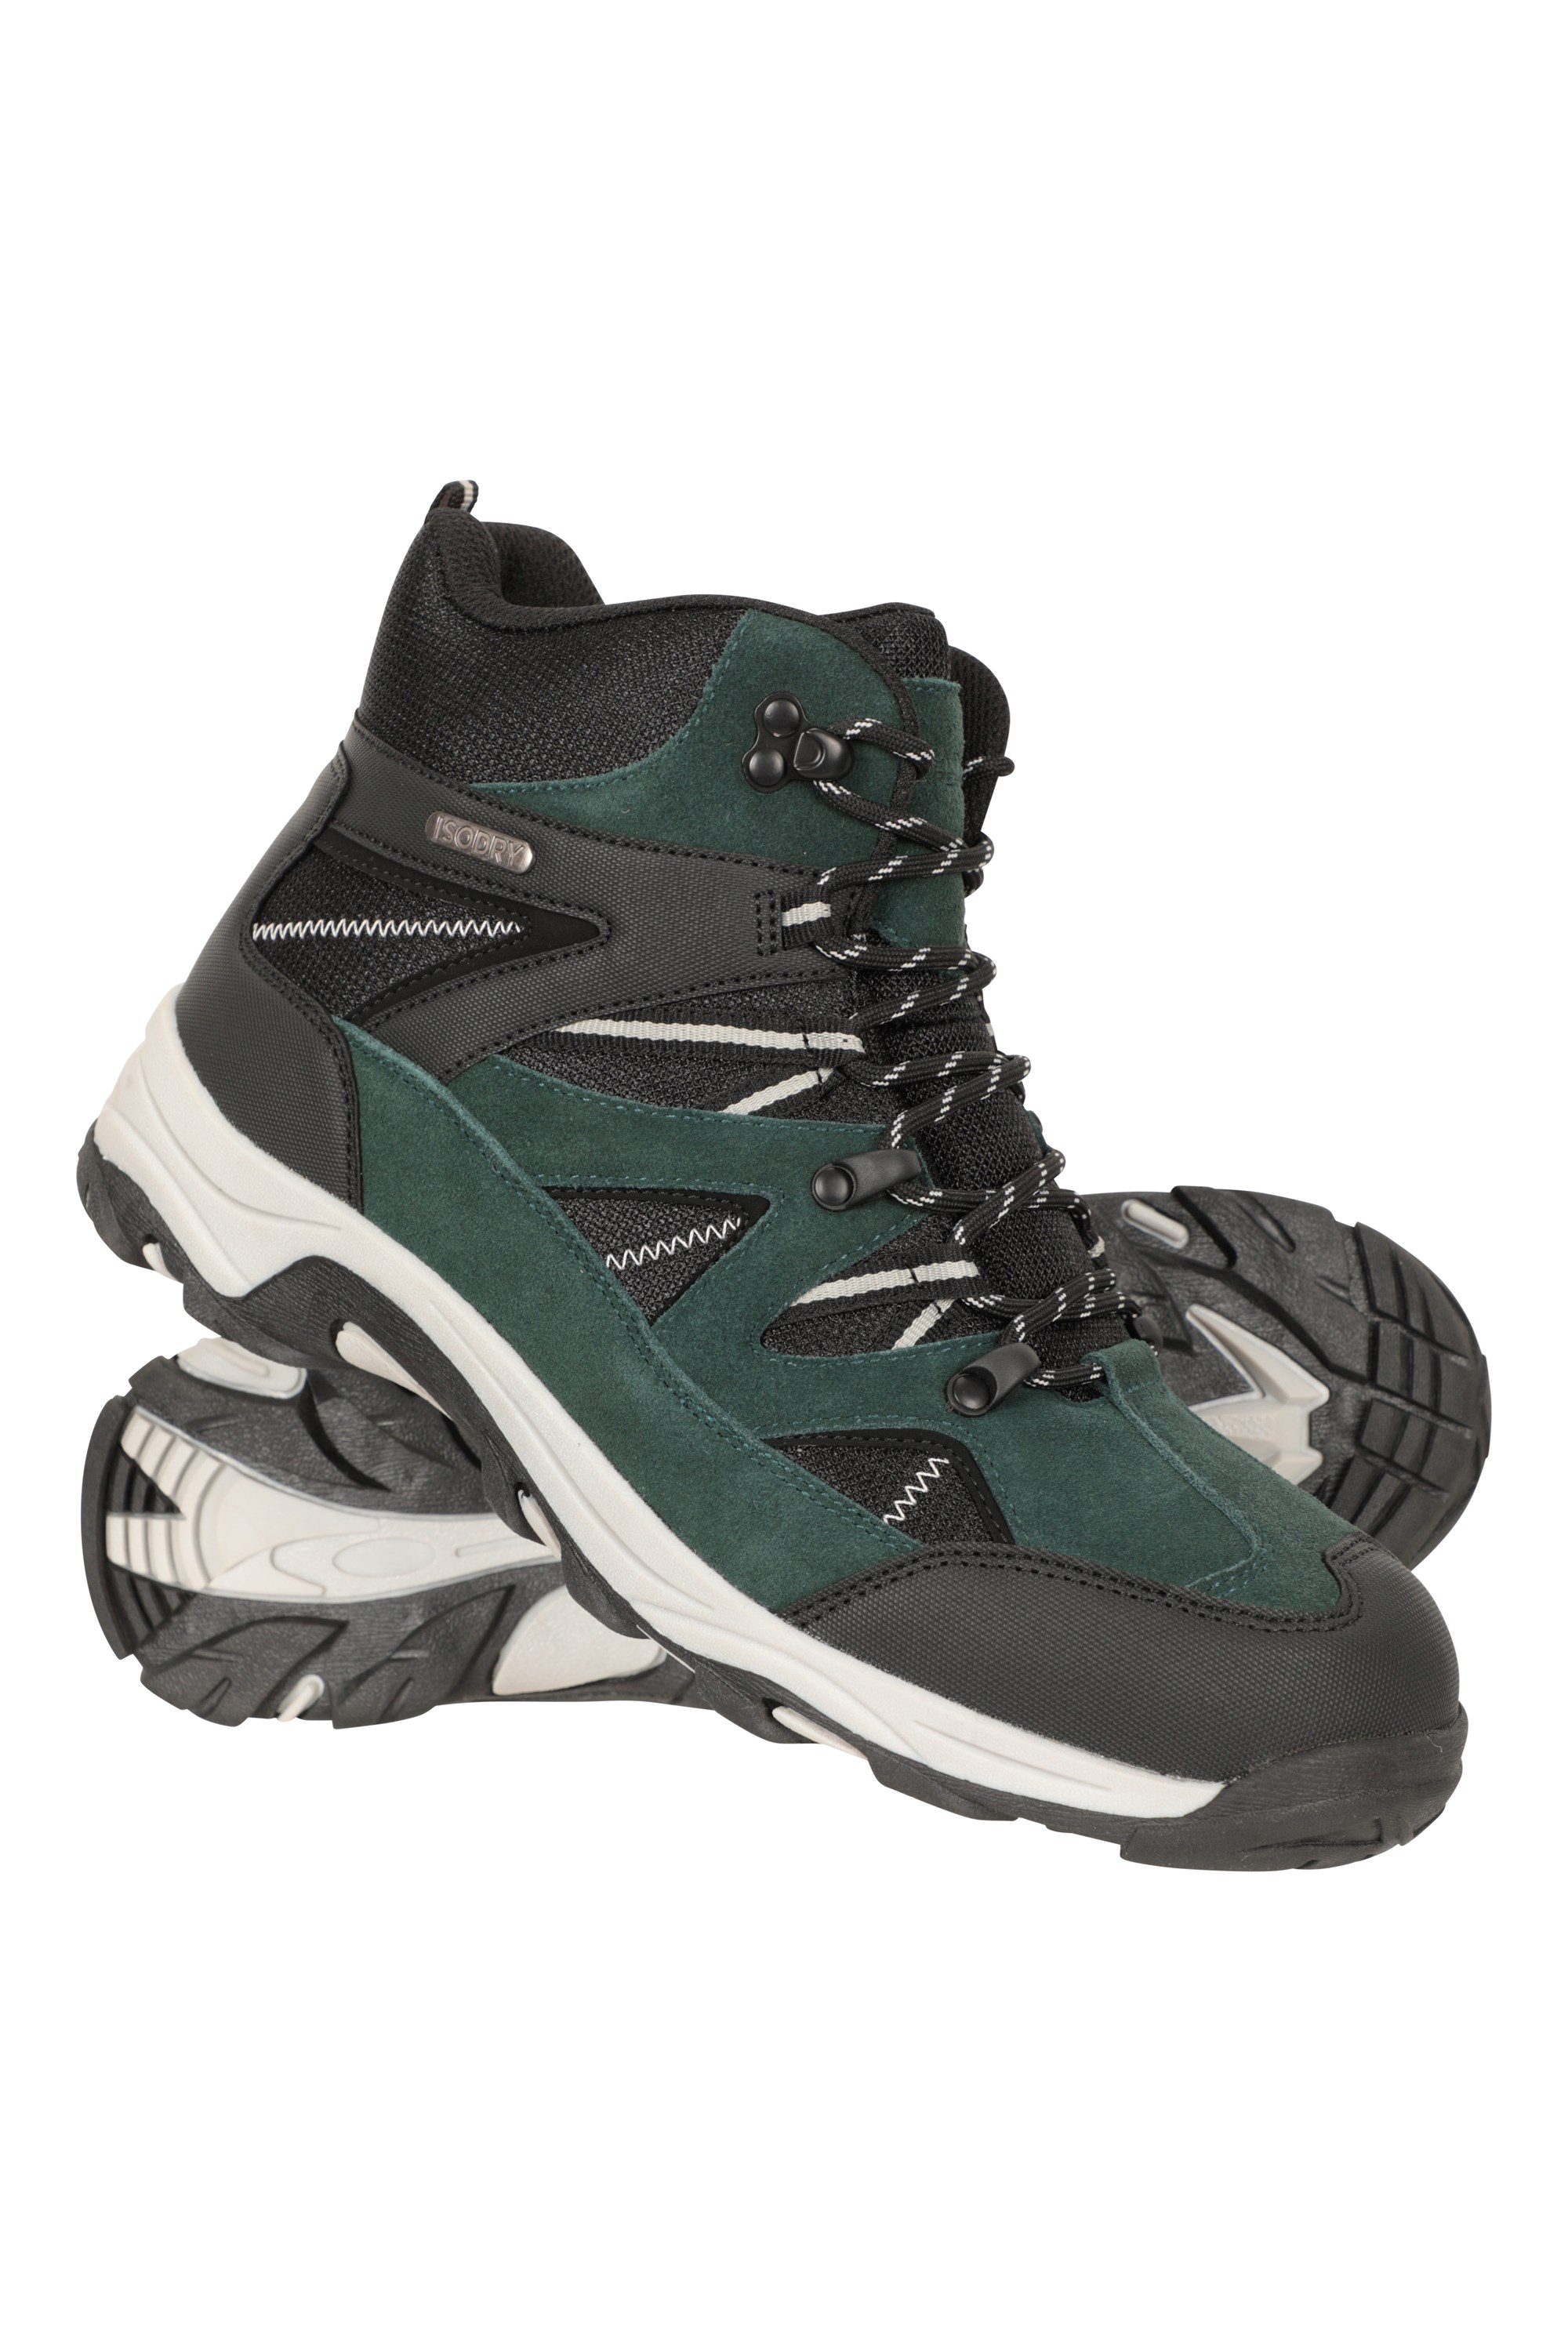 Rapid Mens Waterproof Hiking Boots - Green